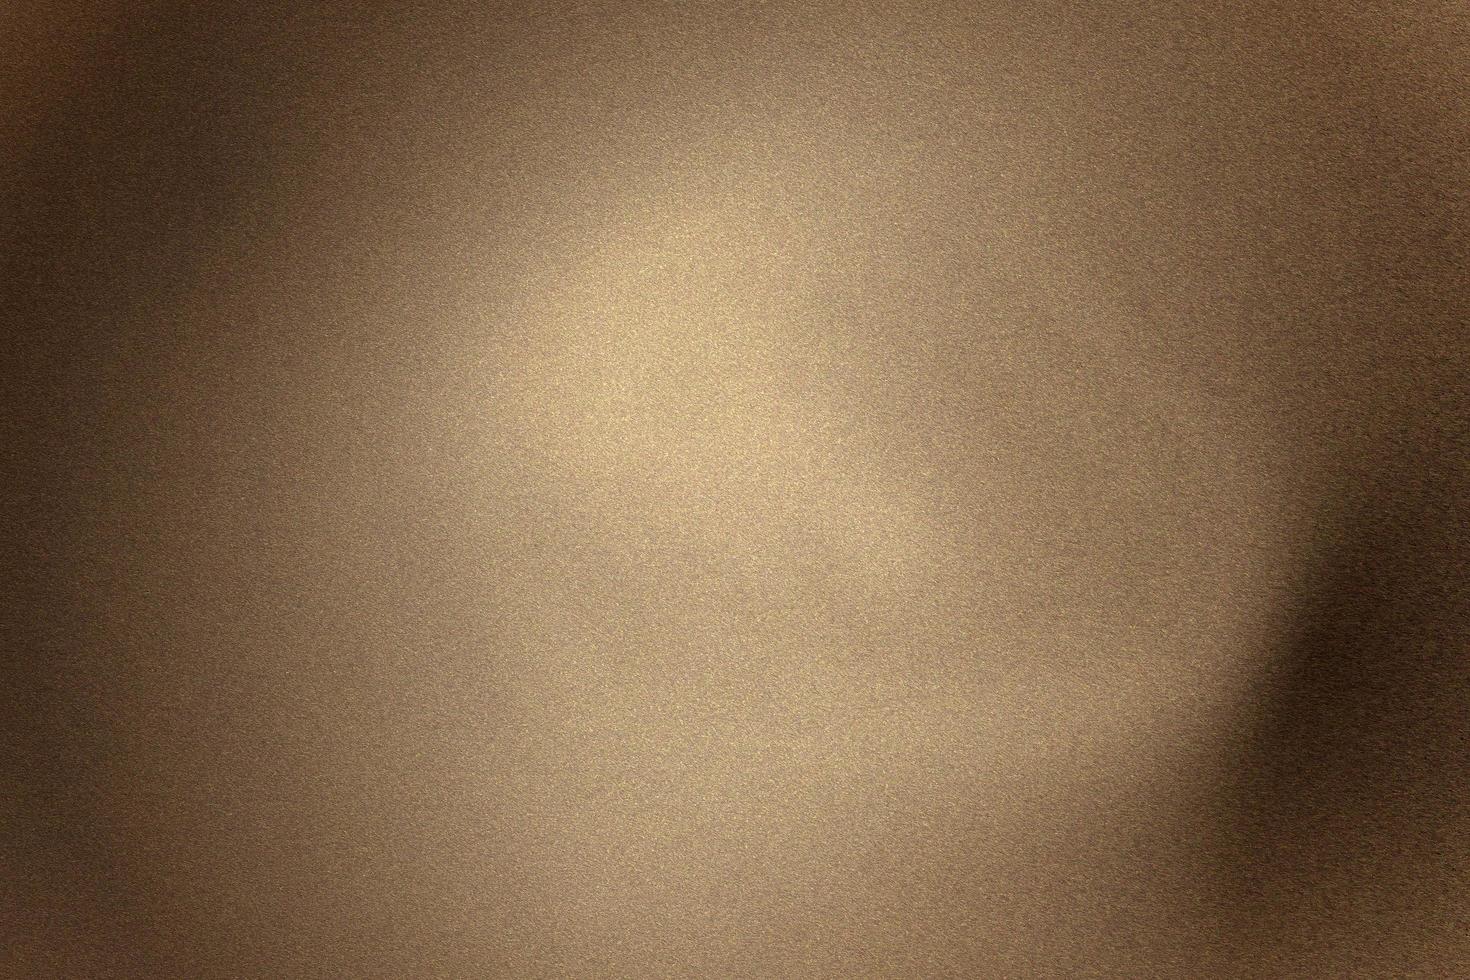 luz brilhando no painel metálico de onda marrom no quarto escuro, fundo de textura abstrata foto